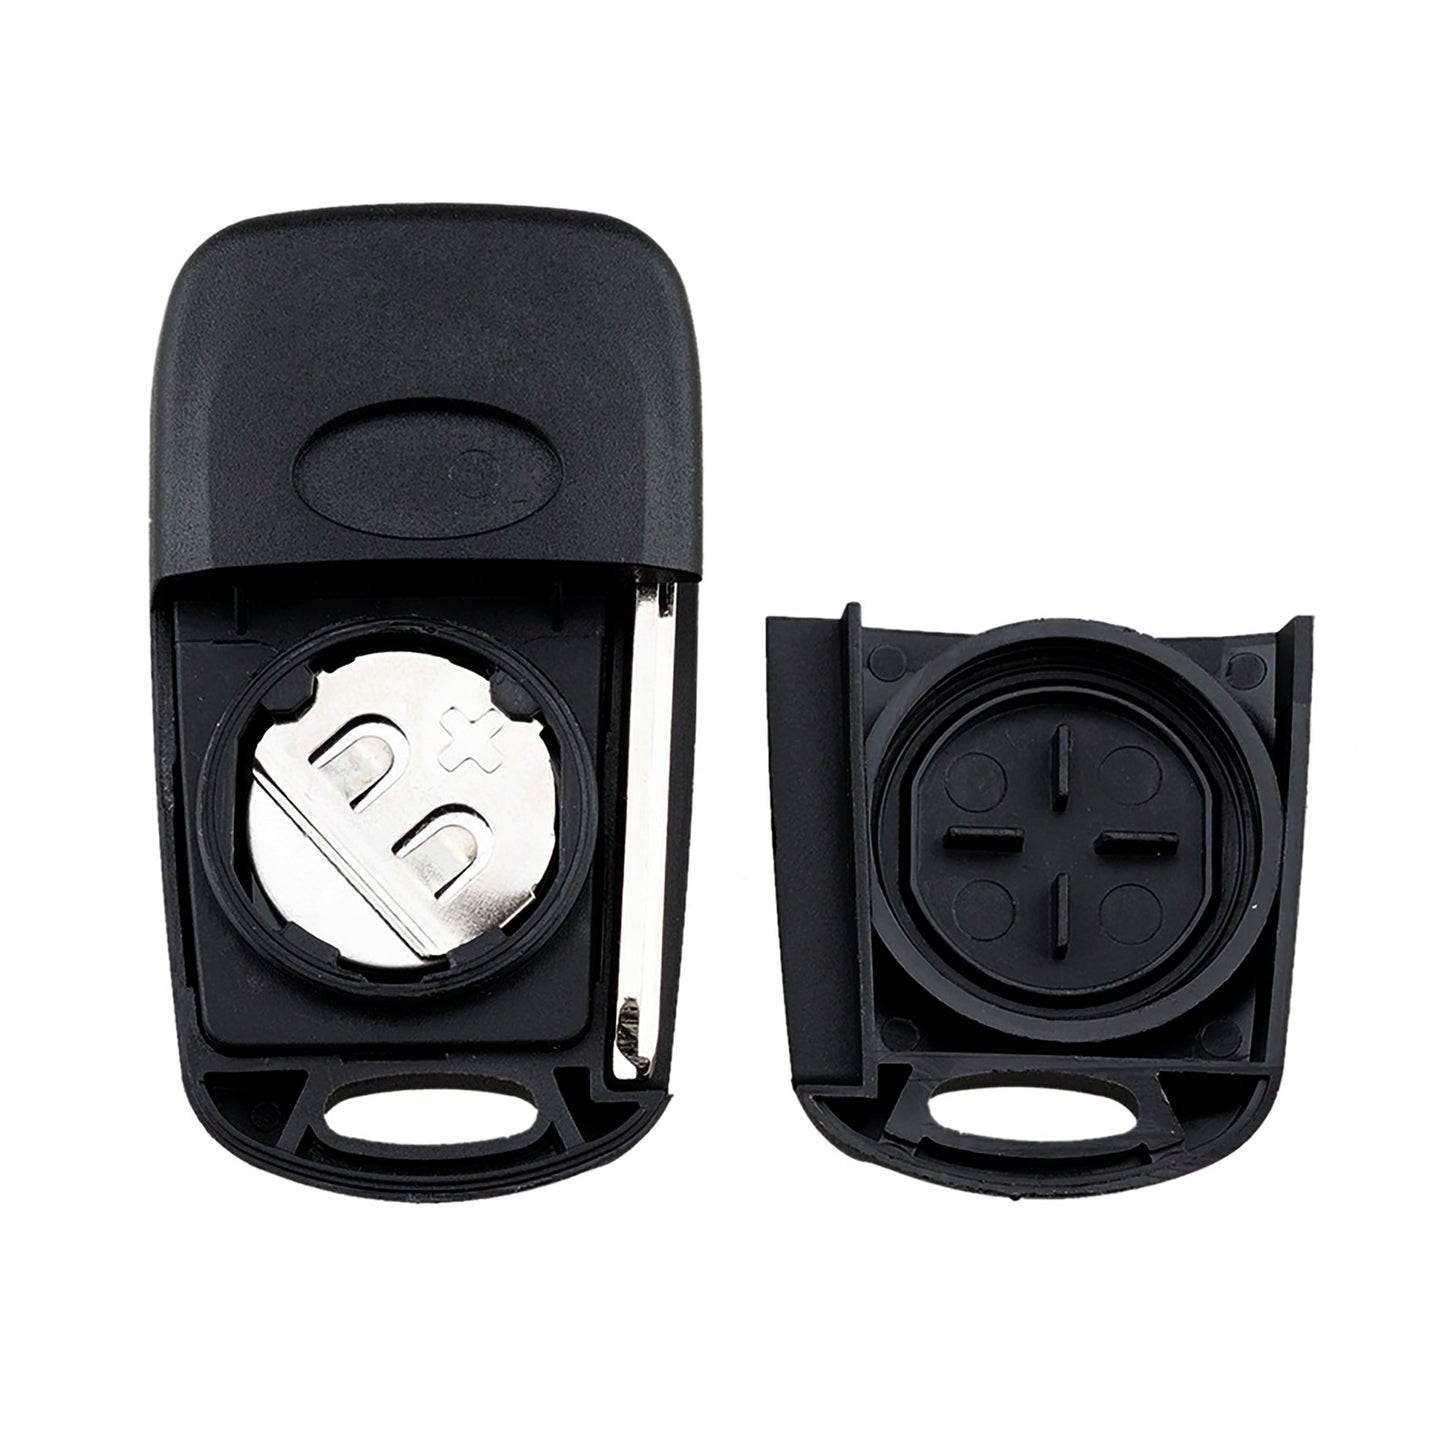 3 Buttons 315MHz Keyless Entry Fob Remote Car Key For 2012 - 2013 Kia Sportage FCC ID: NYOSEKSAM11ATX (SL) SKU : J235